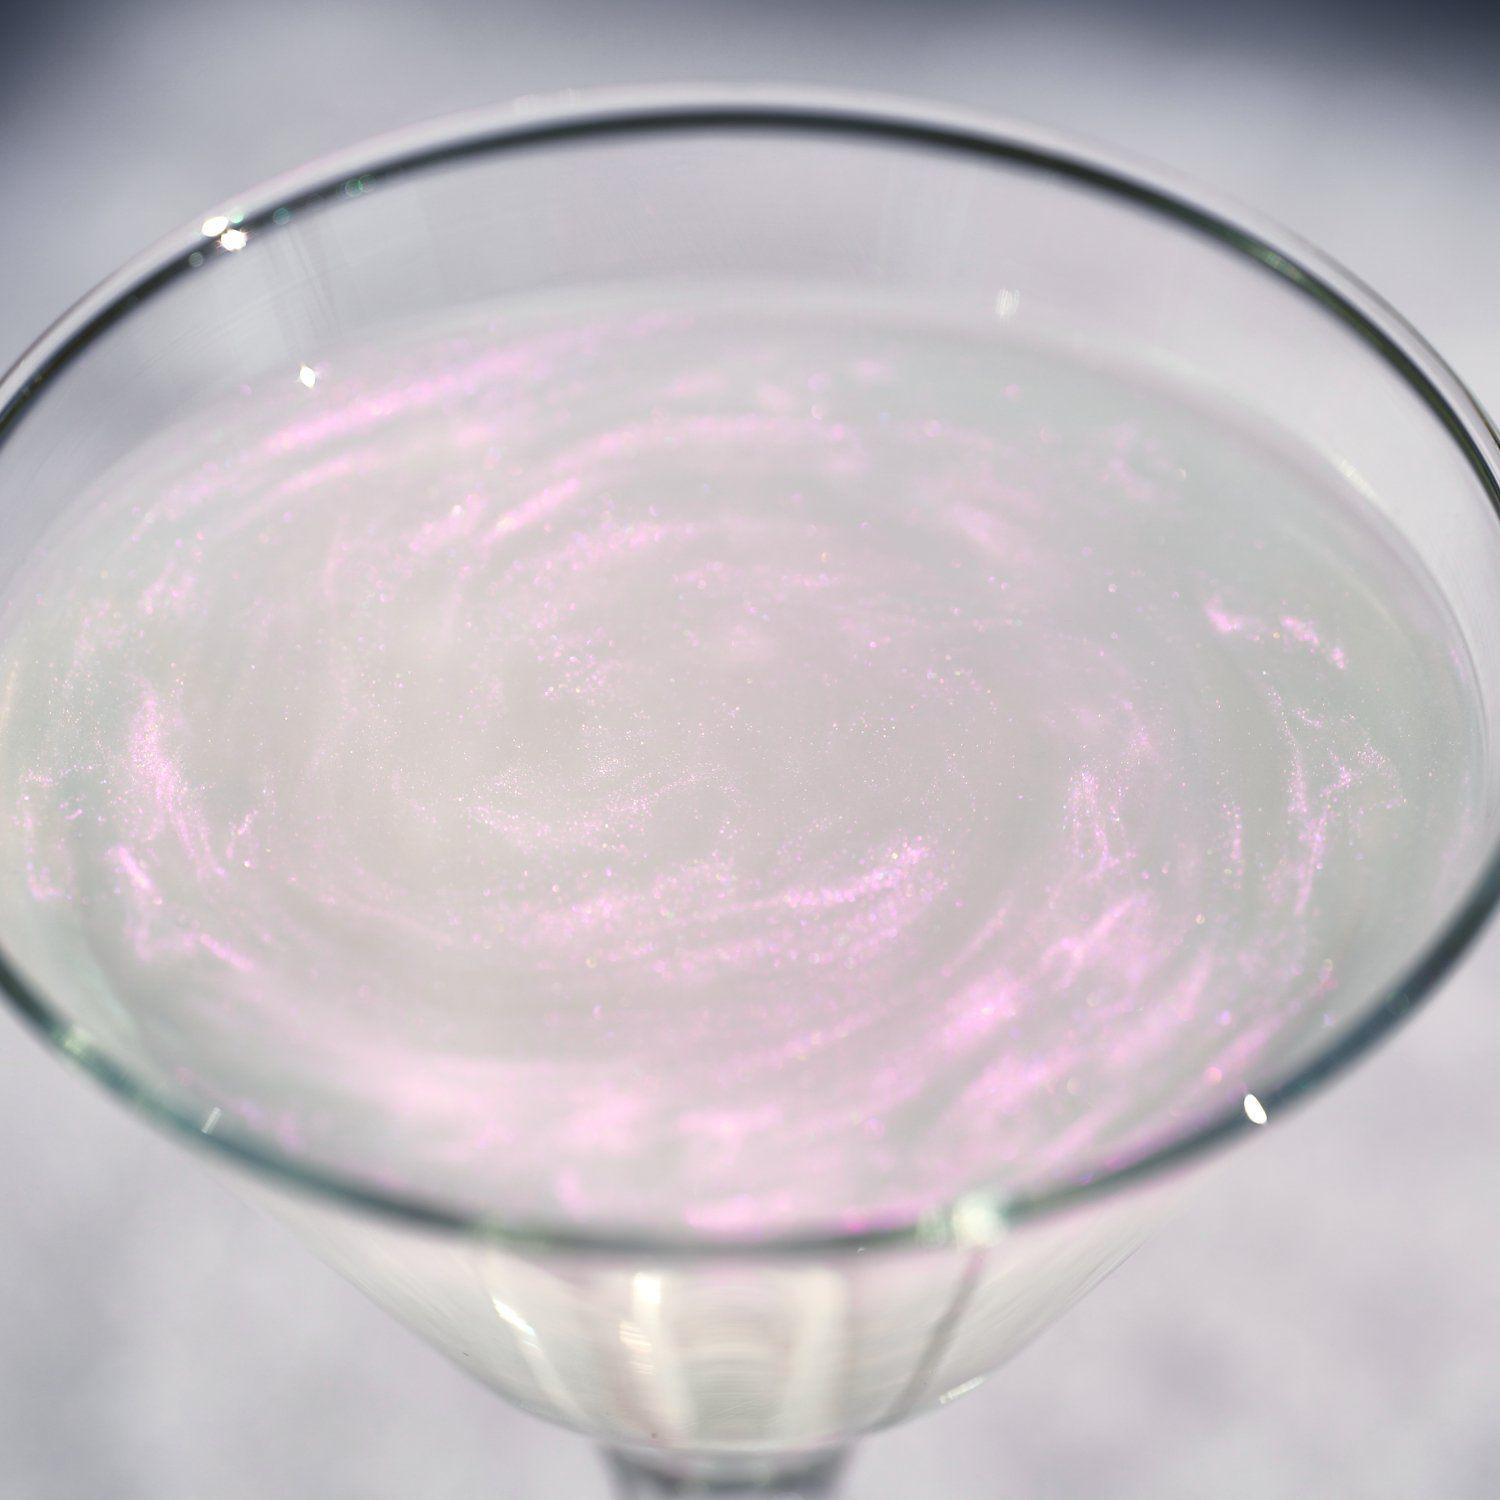 Pink Iridescent Food Grade Brew Glitter | 4 Gram Jar-Brew Glitter®